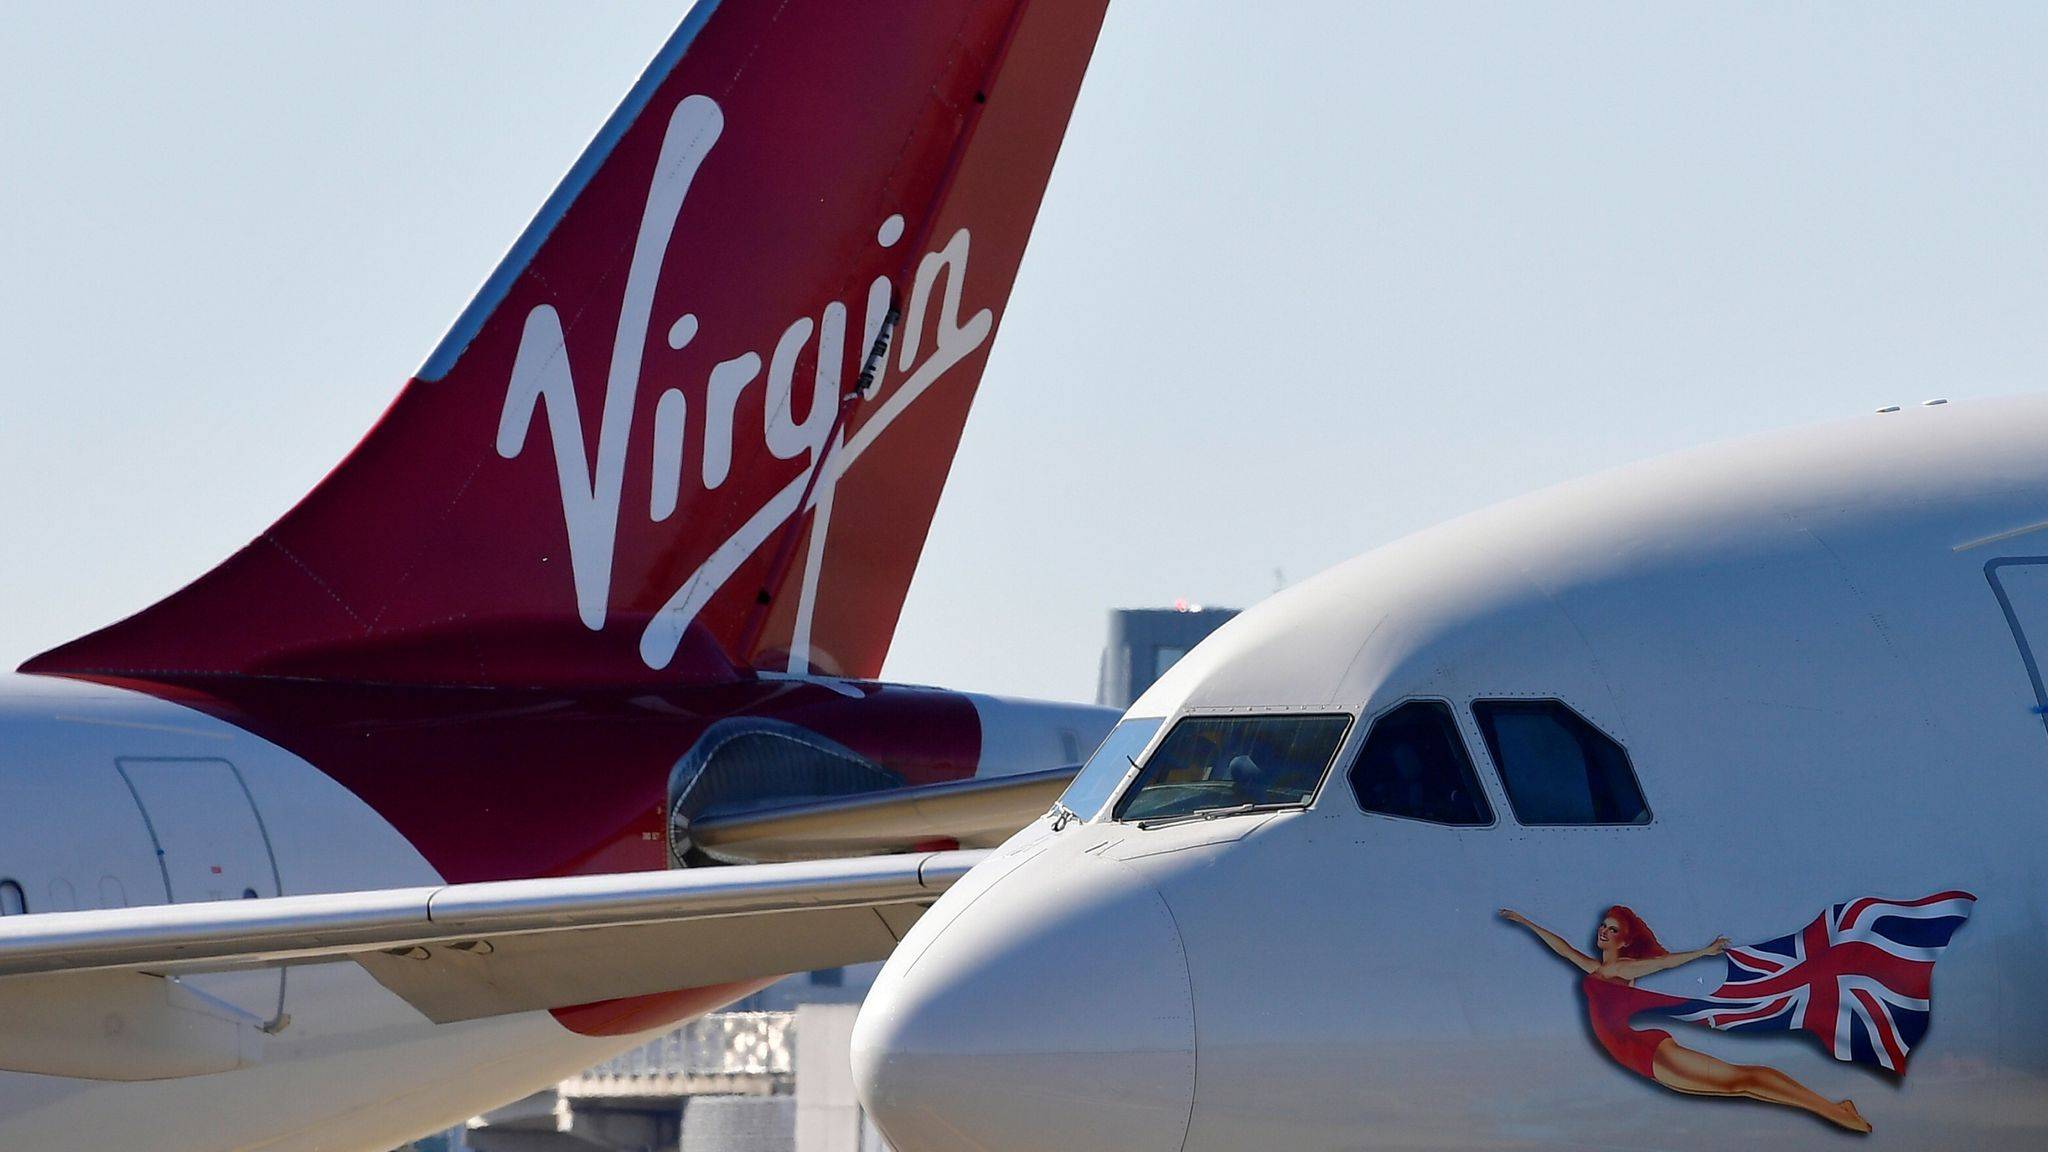 Вирджин Атлантик. Virgin Atlantic Airlines Skyteam livery. Virgin Atlantic Challenger 1. Virgin Atlantic (Великобритания) первый класс. Airline miles